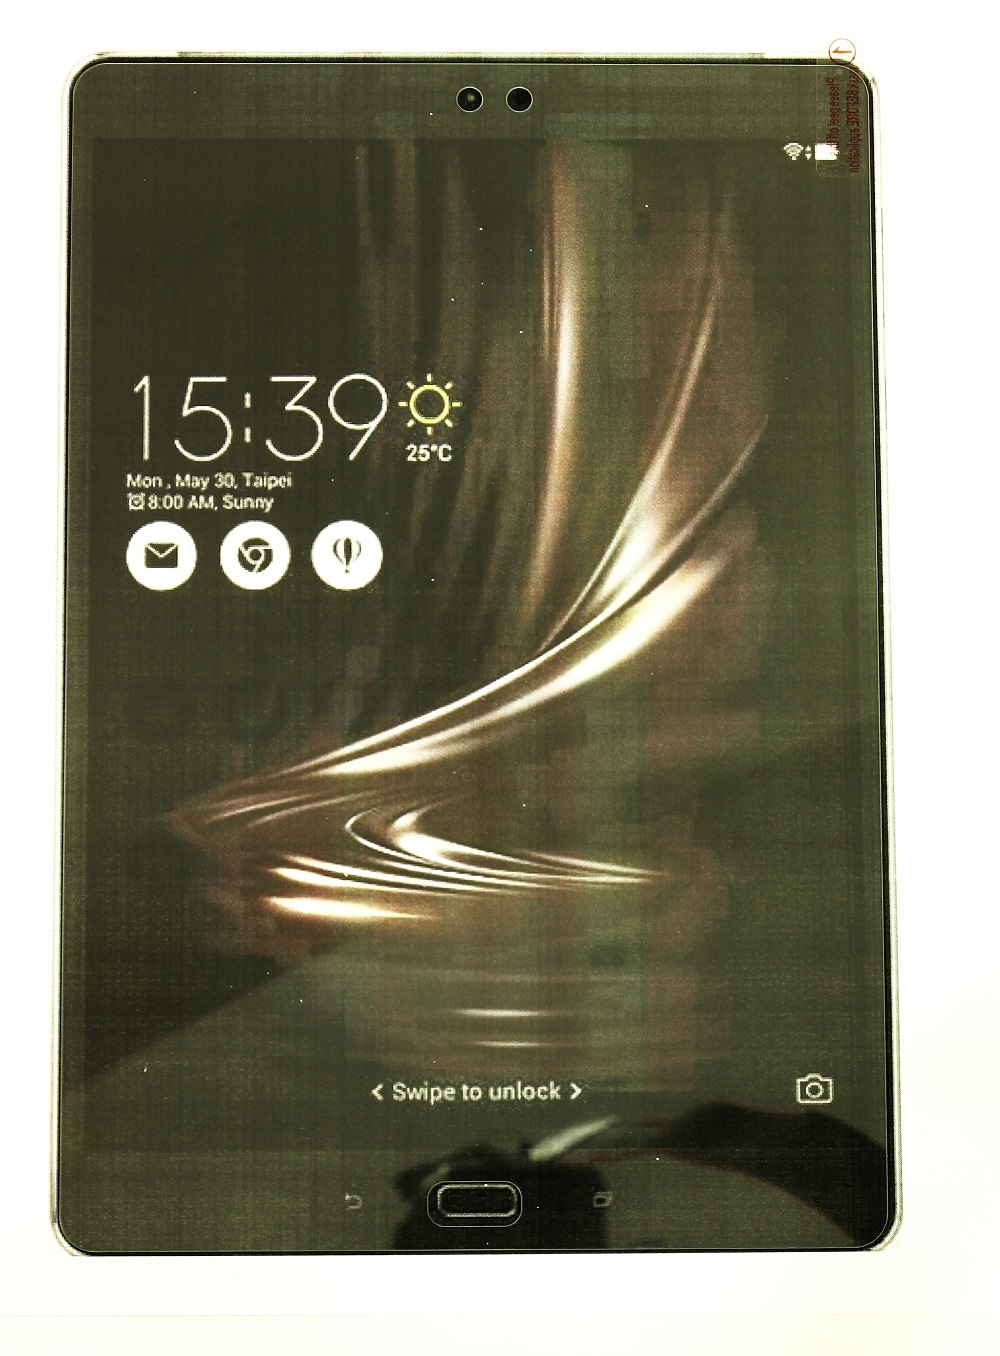 Glassbeskyttelse Asus ZenPad 3s 10 (Z500M)